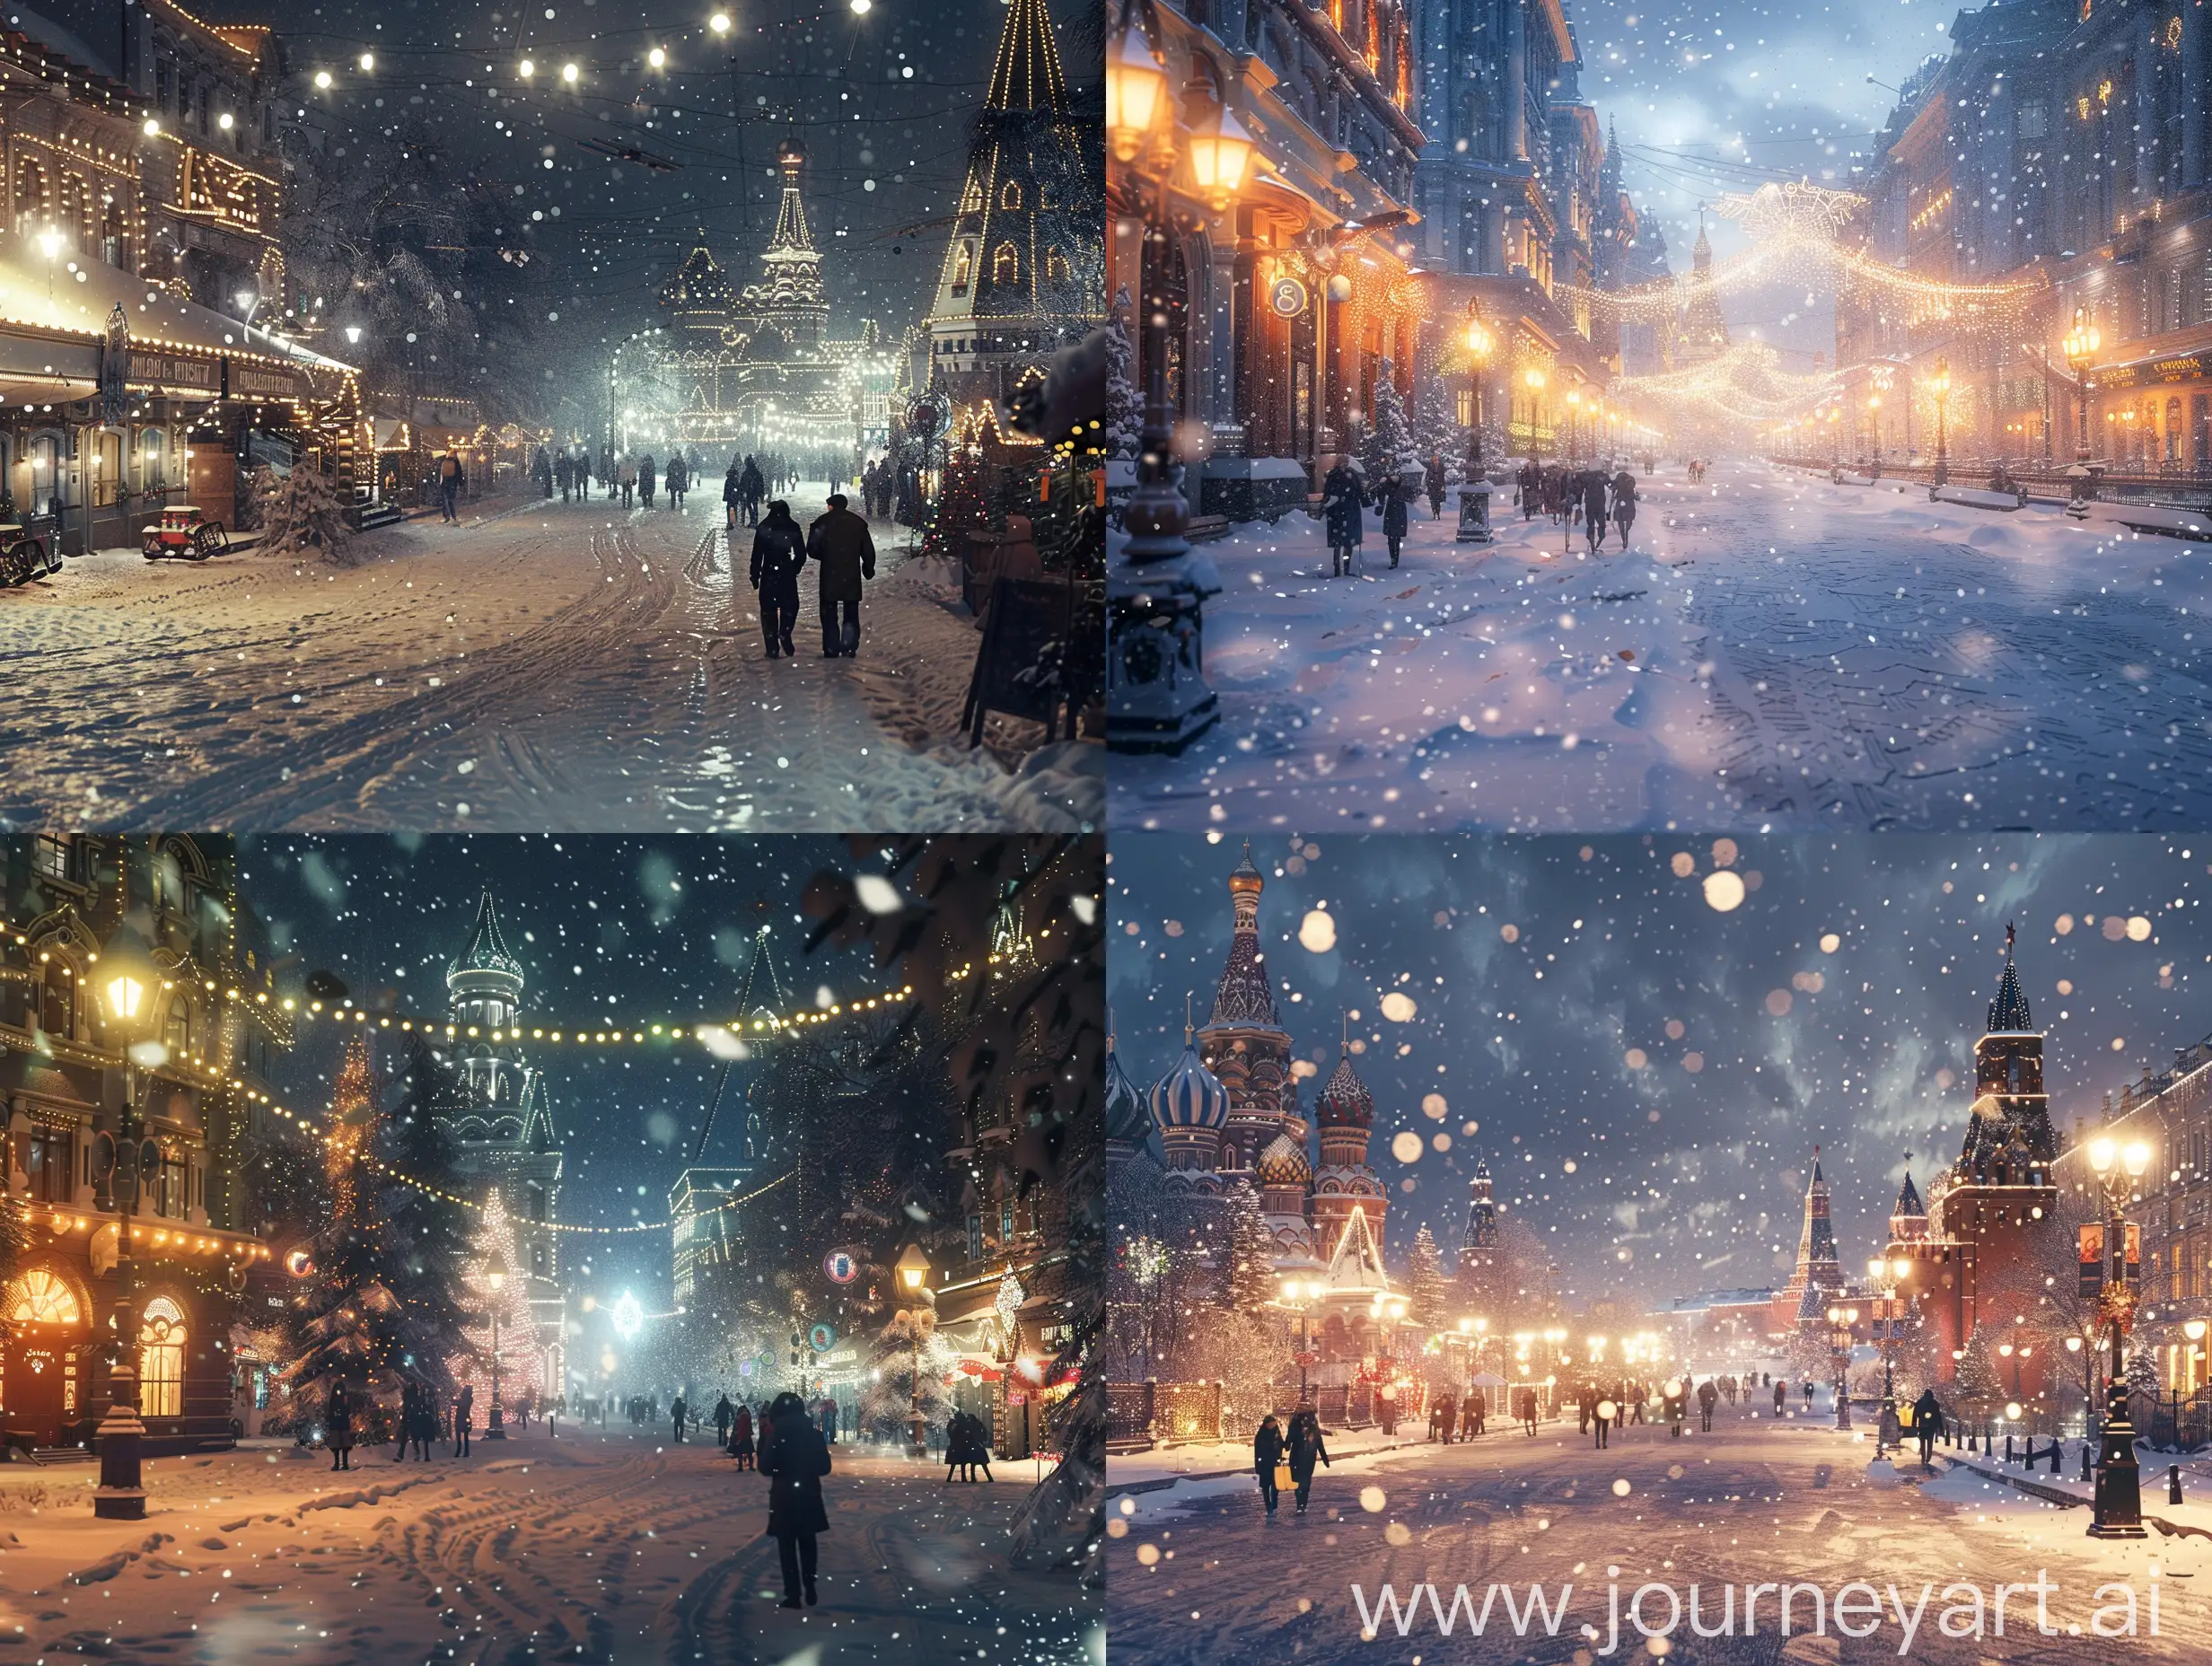 Enchanting-Winter-Scene-Snowy-Russian-City-Lights-and-Joyful-People